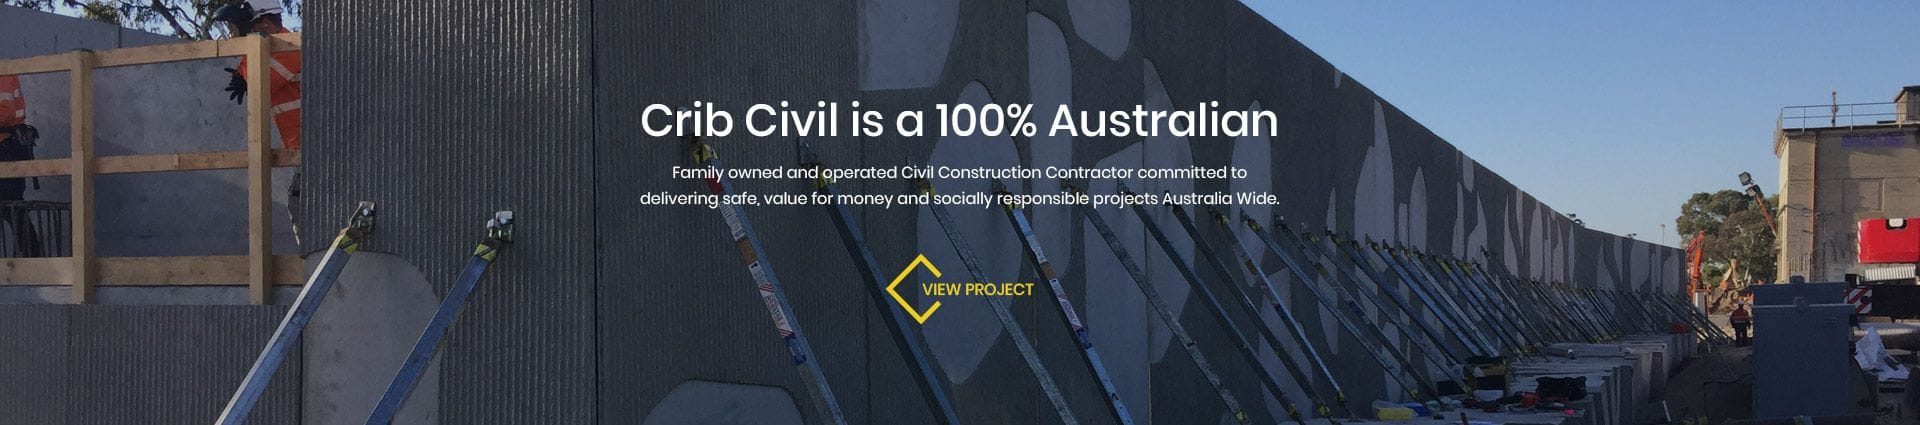 Civil Infrastructure | Crib Civil